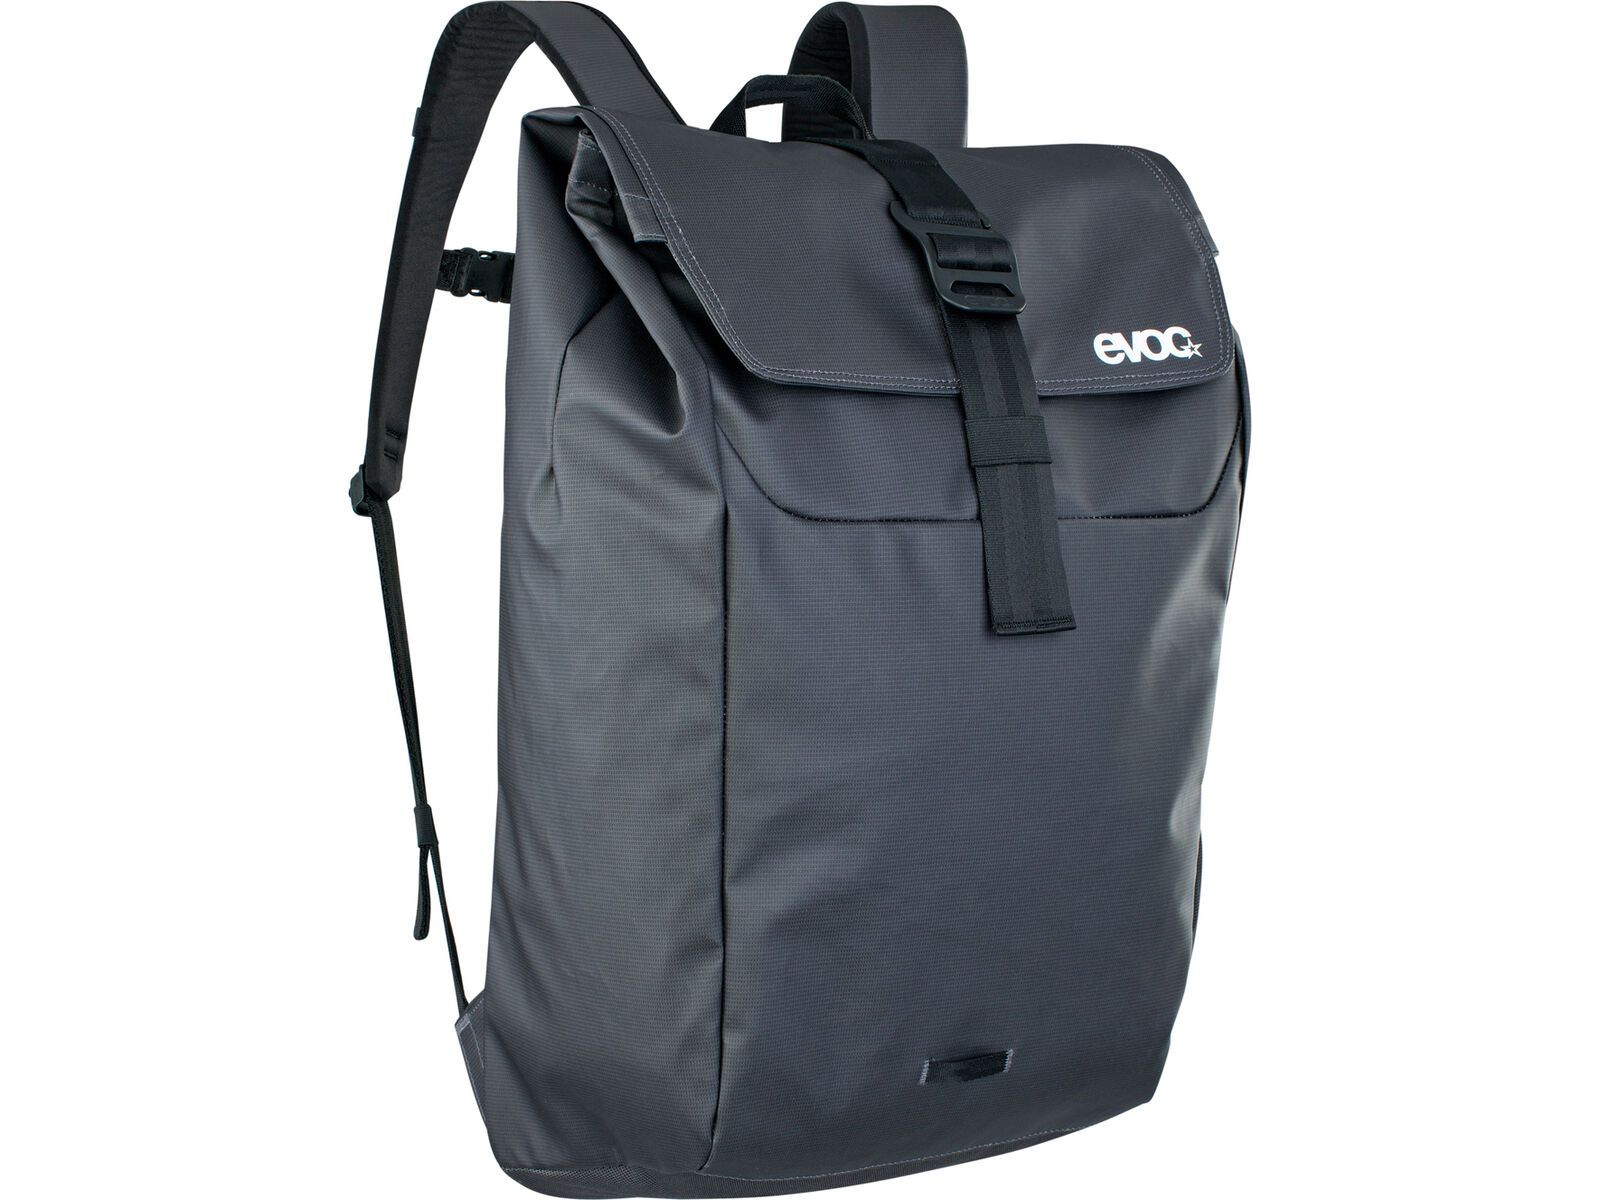 Evoc Duffle Backpack 26, carbon grey/black | Bild 2